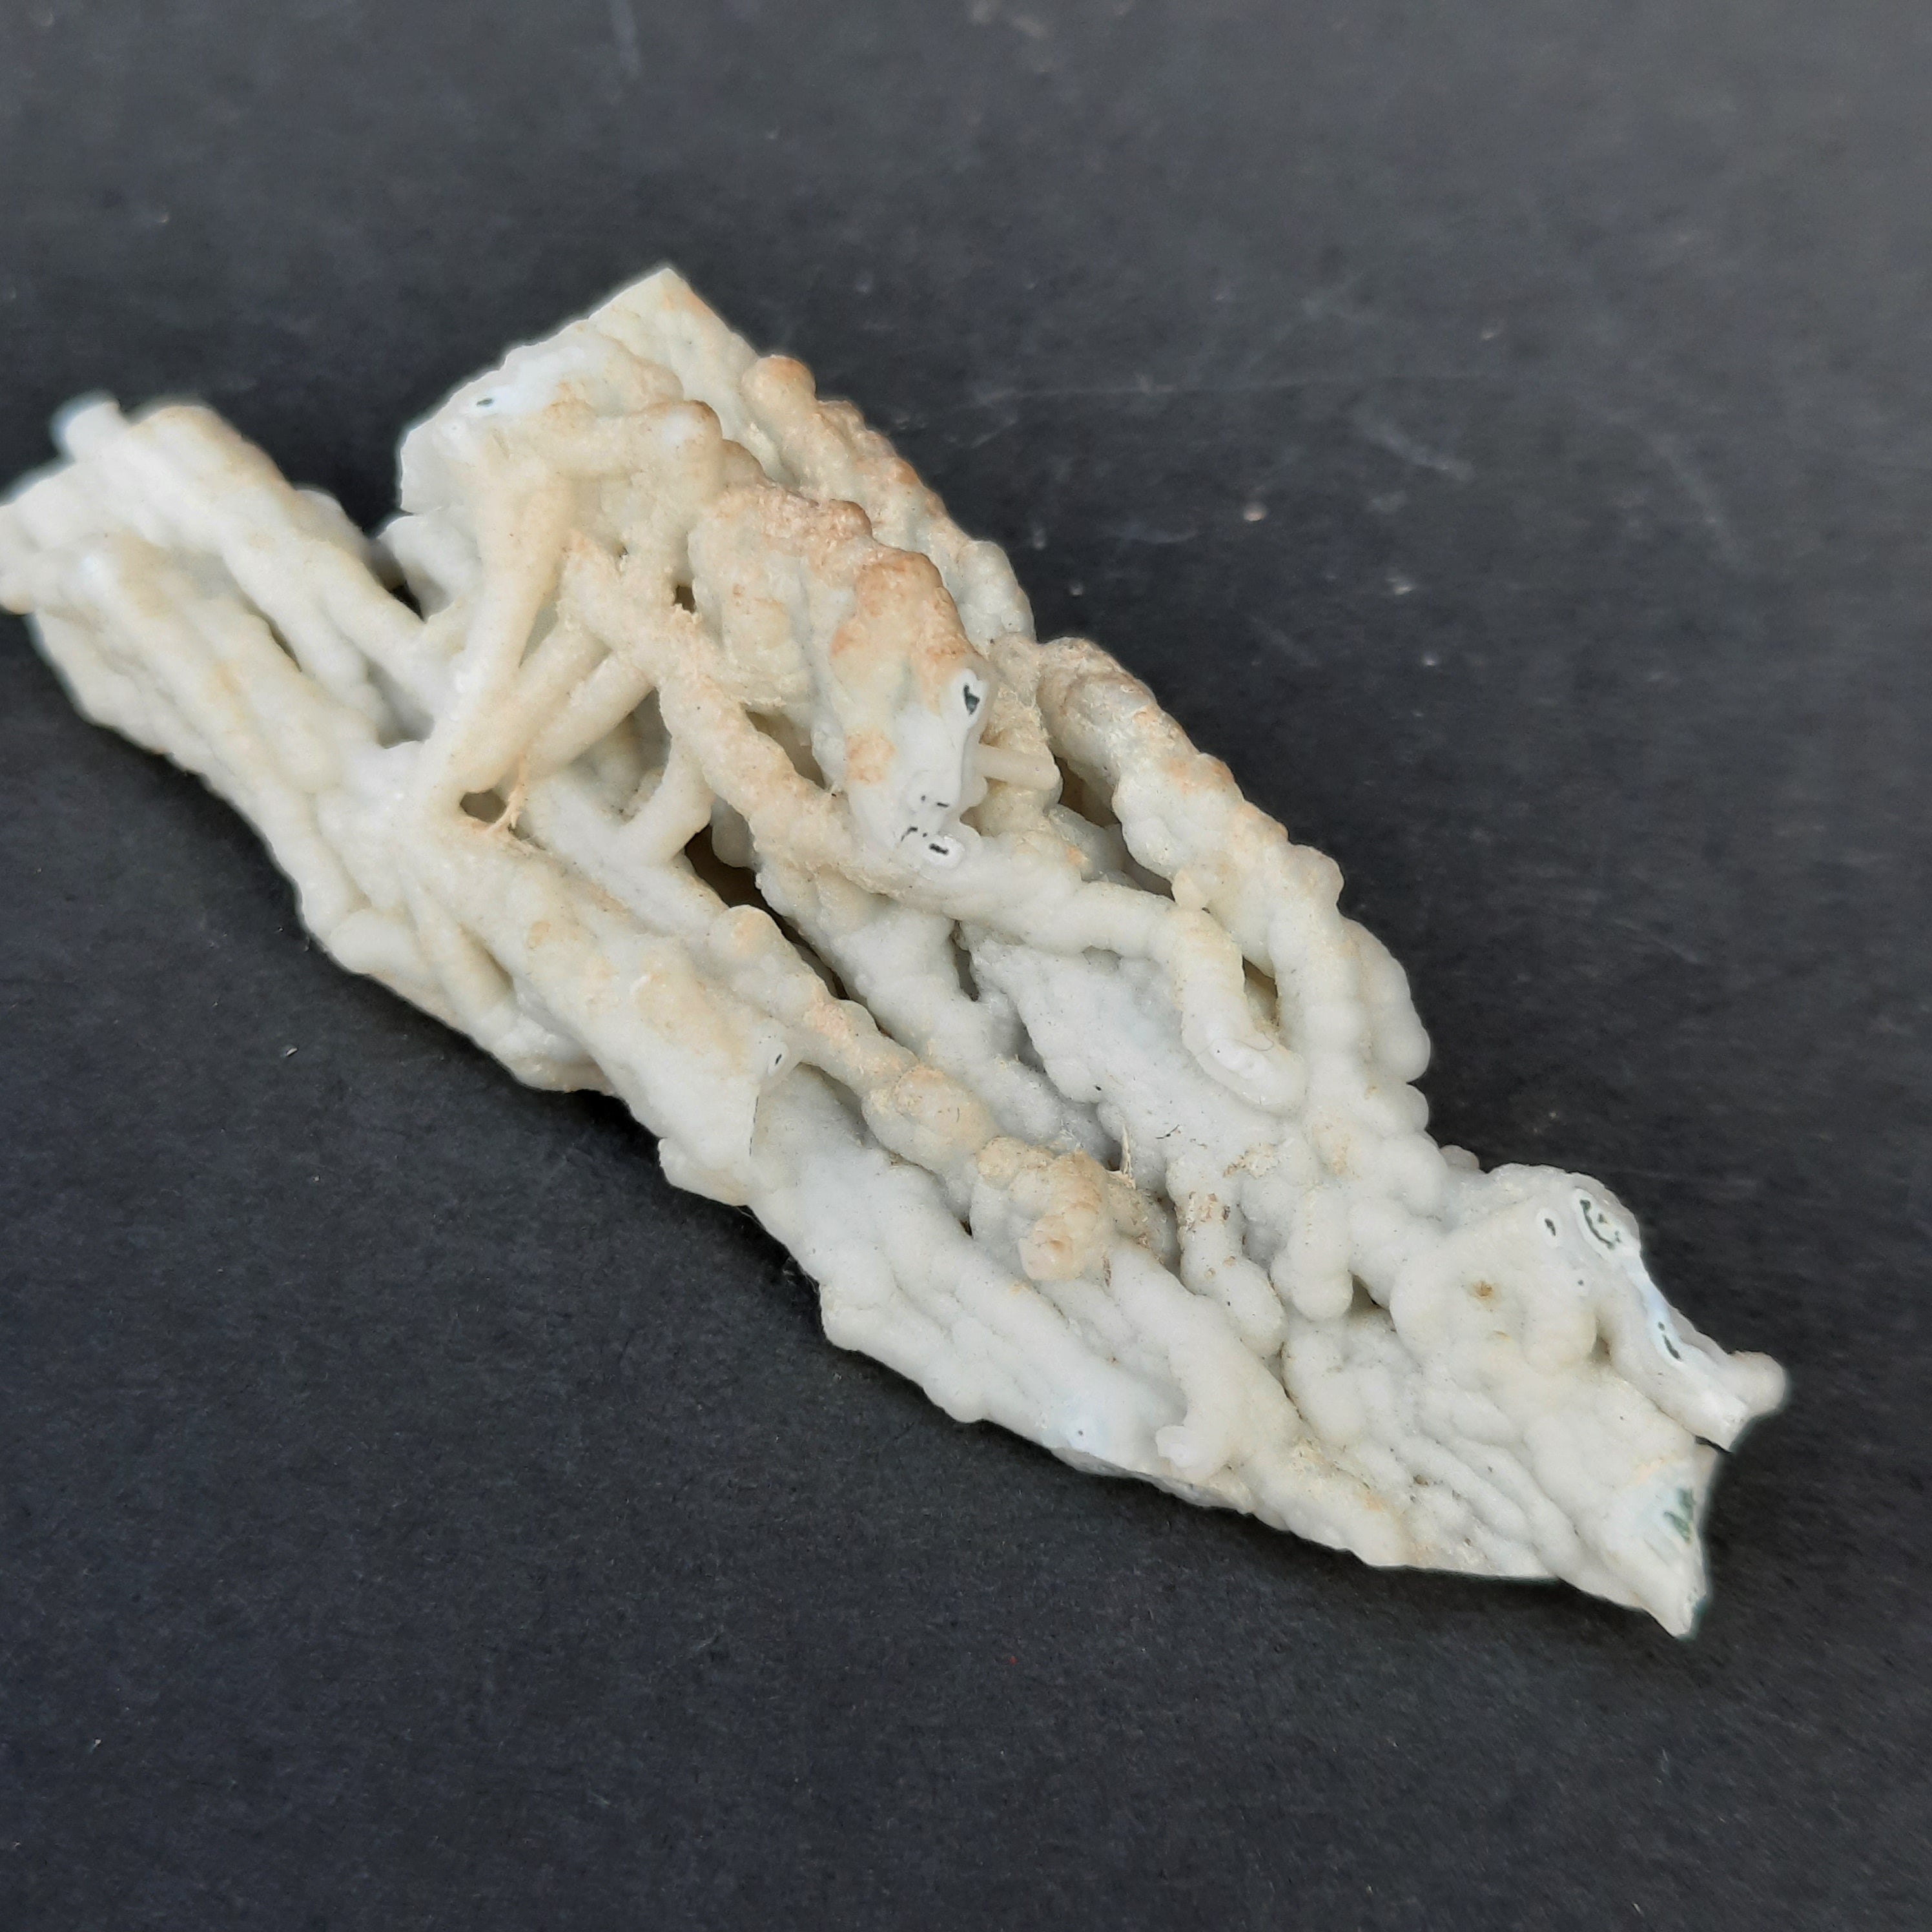 Coral chalceodony specimen